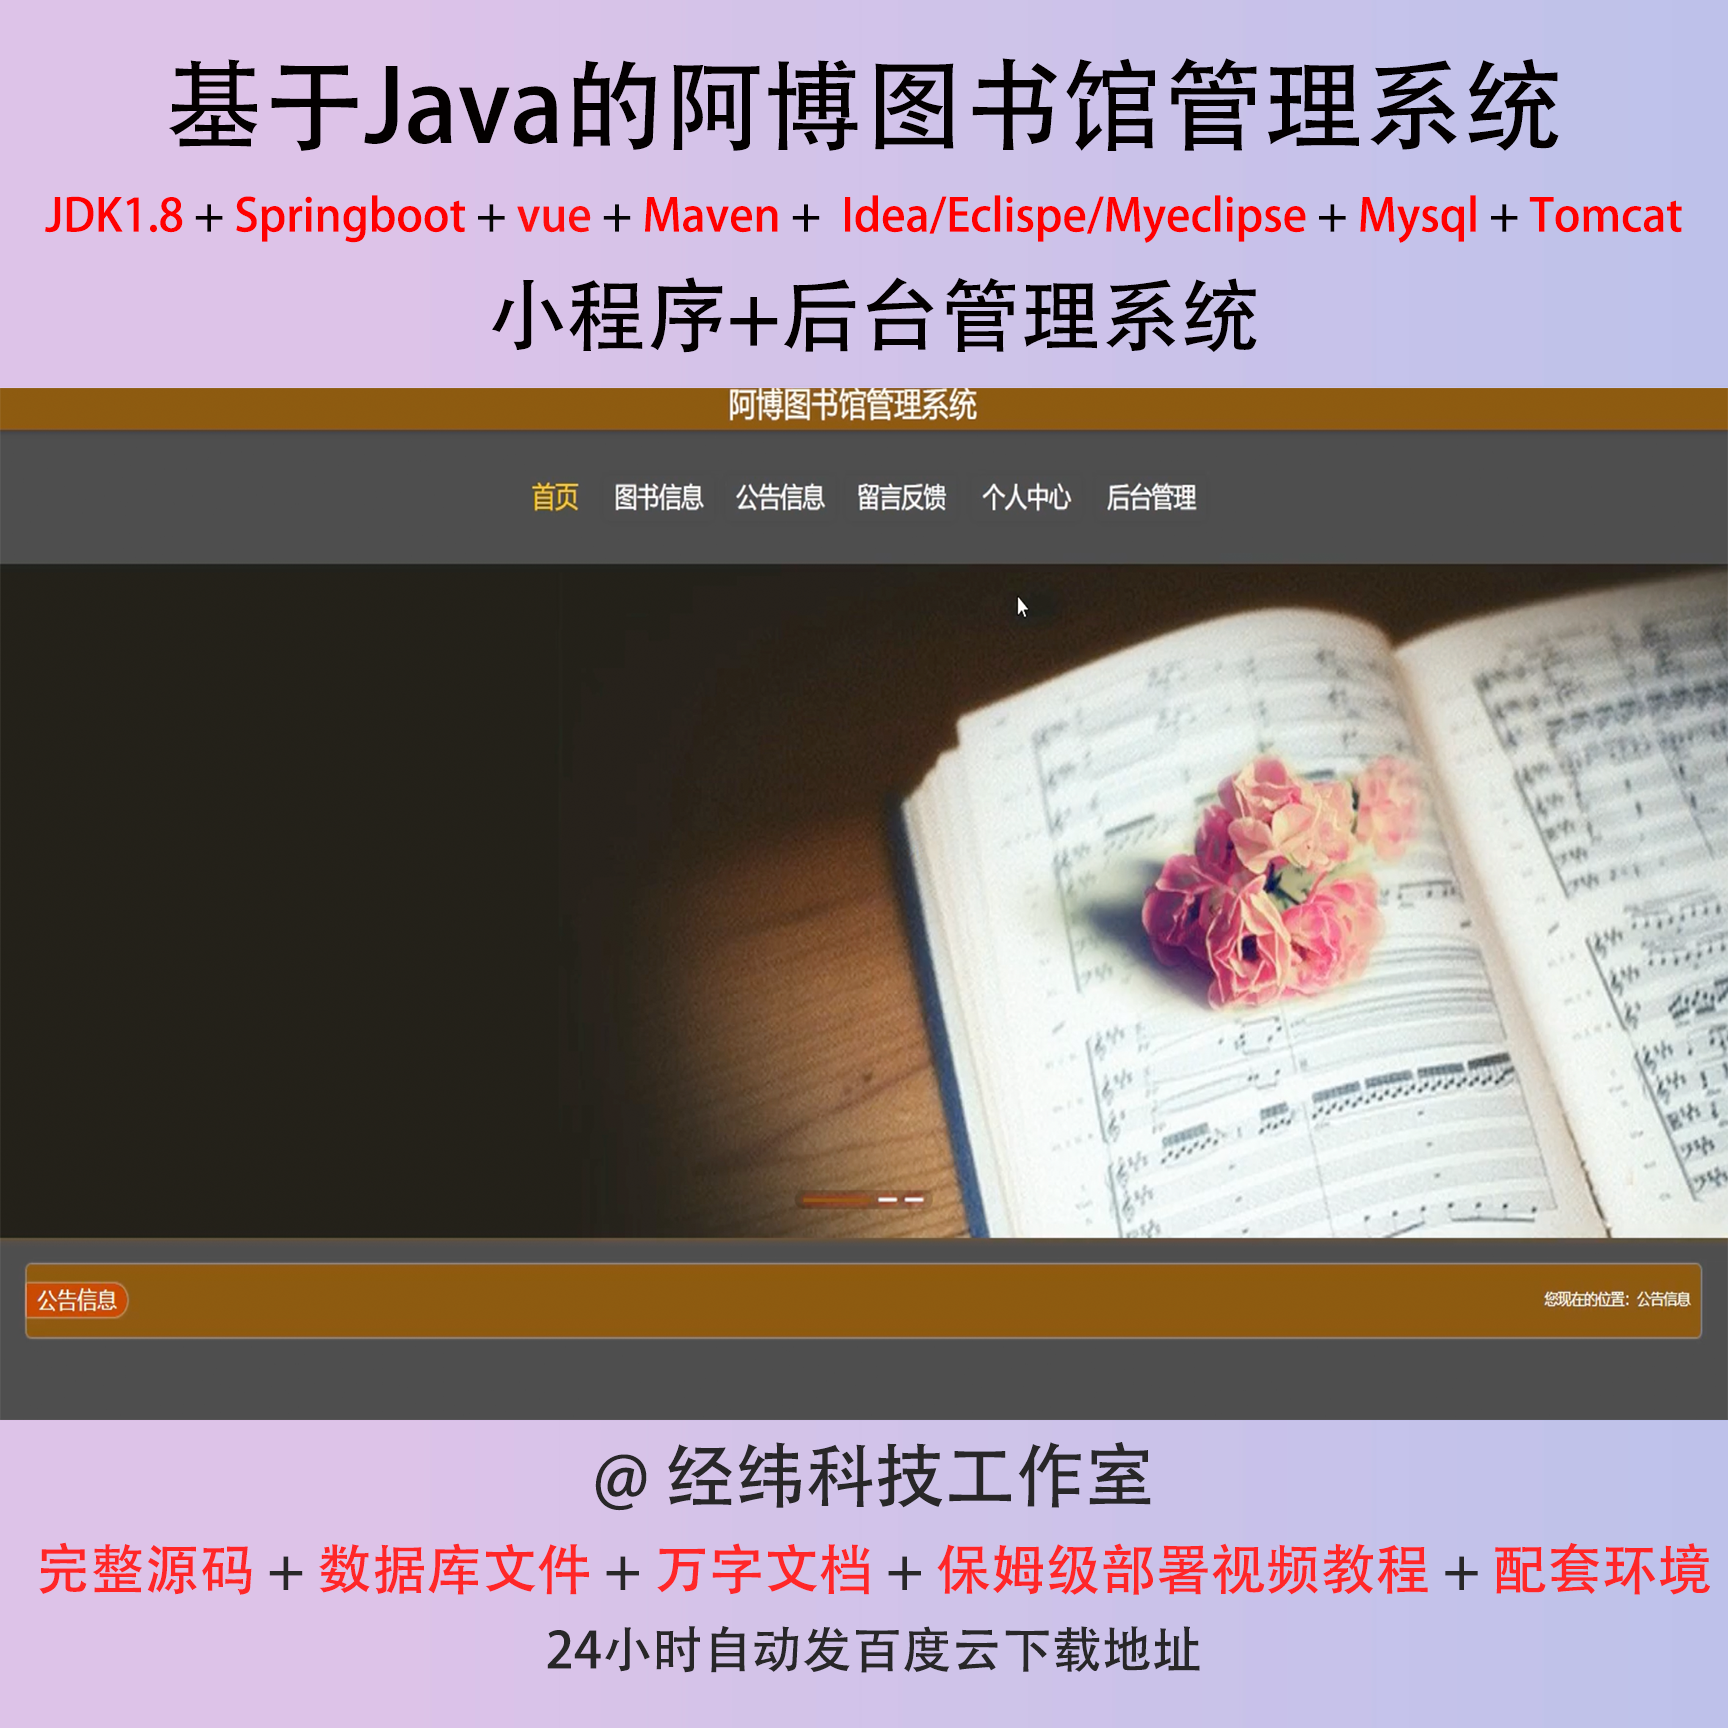 java springboot 阿博图书馆管理系统在线网上平台网站程序源代码